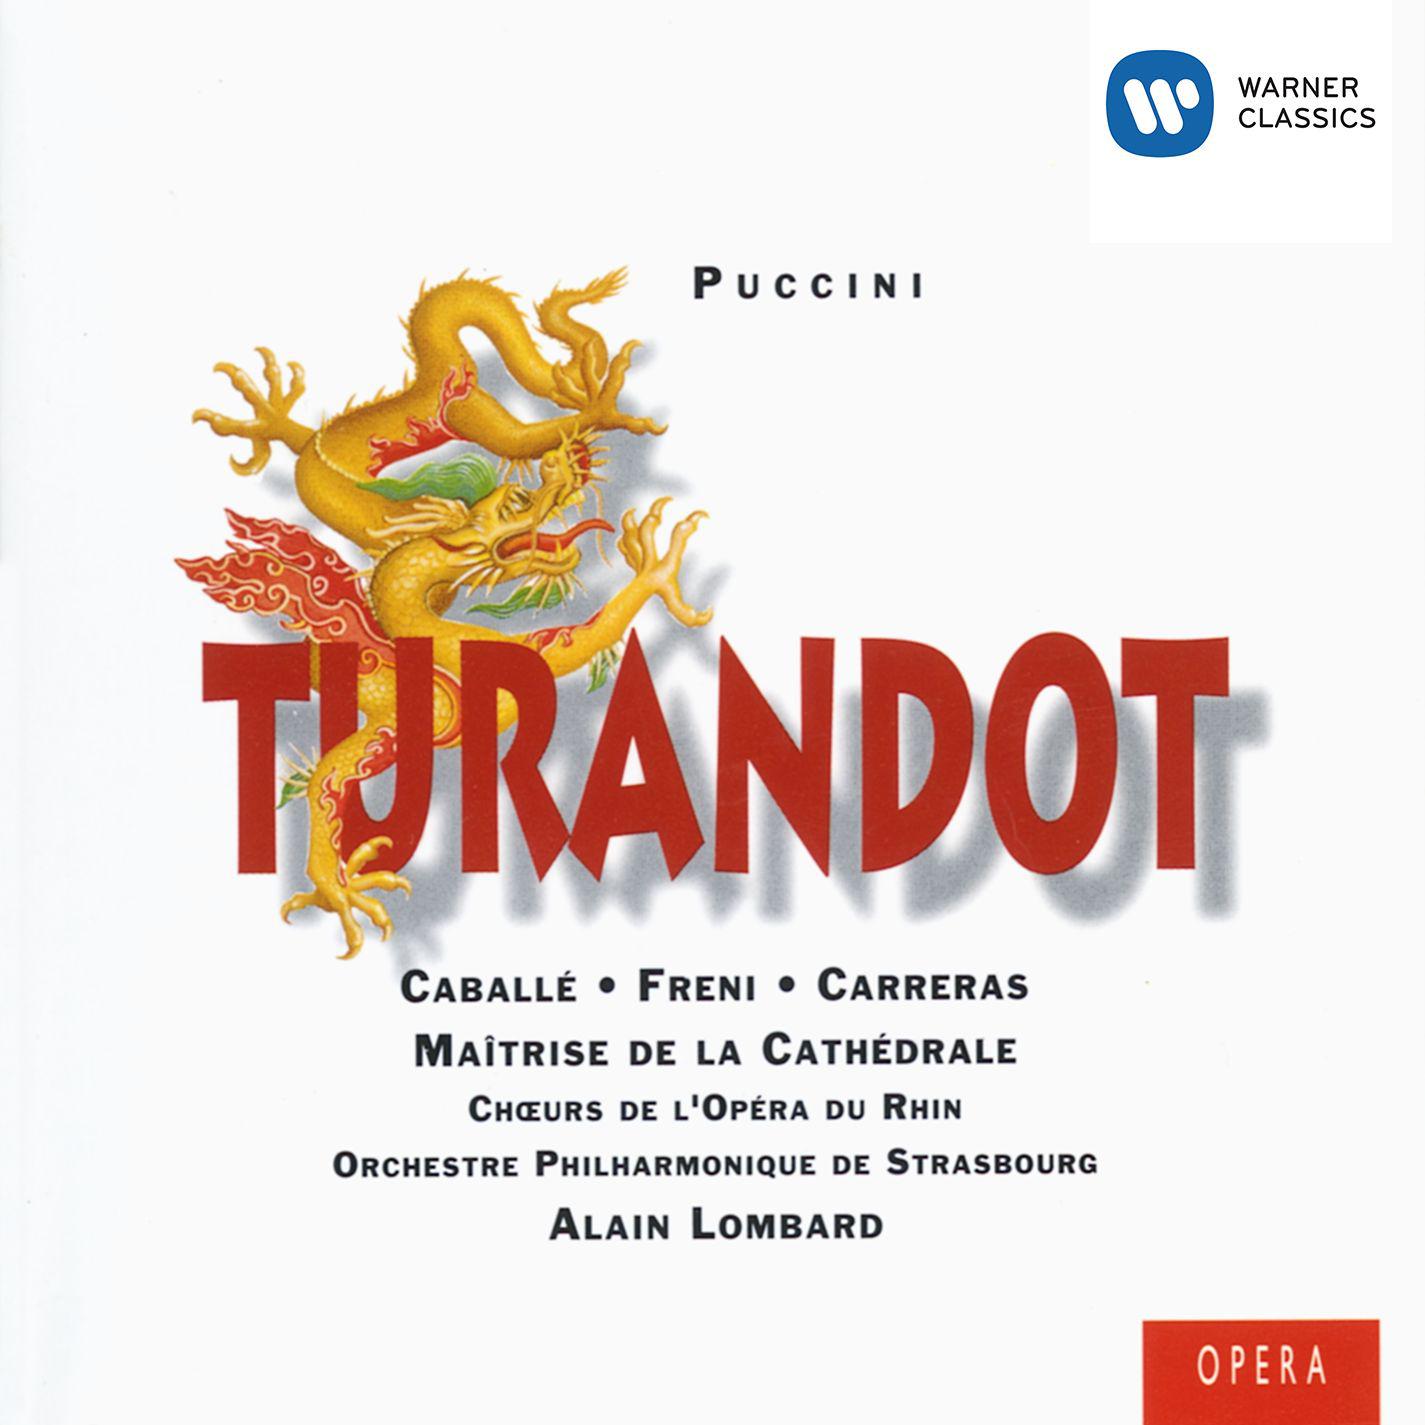 José Carreras/Petra Malakova/Eva Saurova/Orchestre Philharmonique de Strasbourg/Alain Lombard - Turandot (1994 Remastered Version), Act III, Scene 1: Nessun Dorma (Calaf, Women's voices)